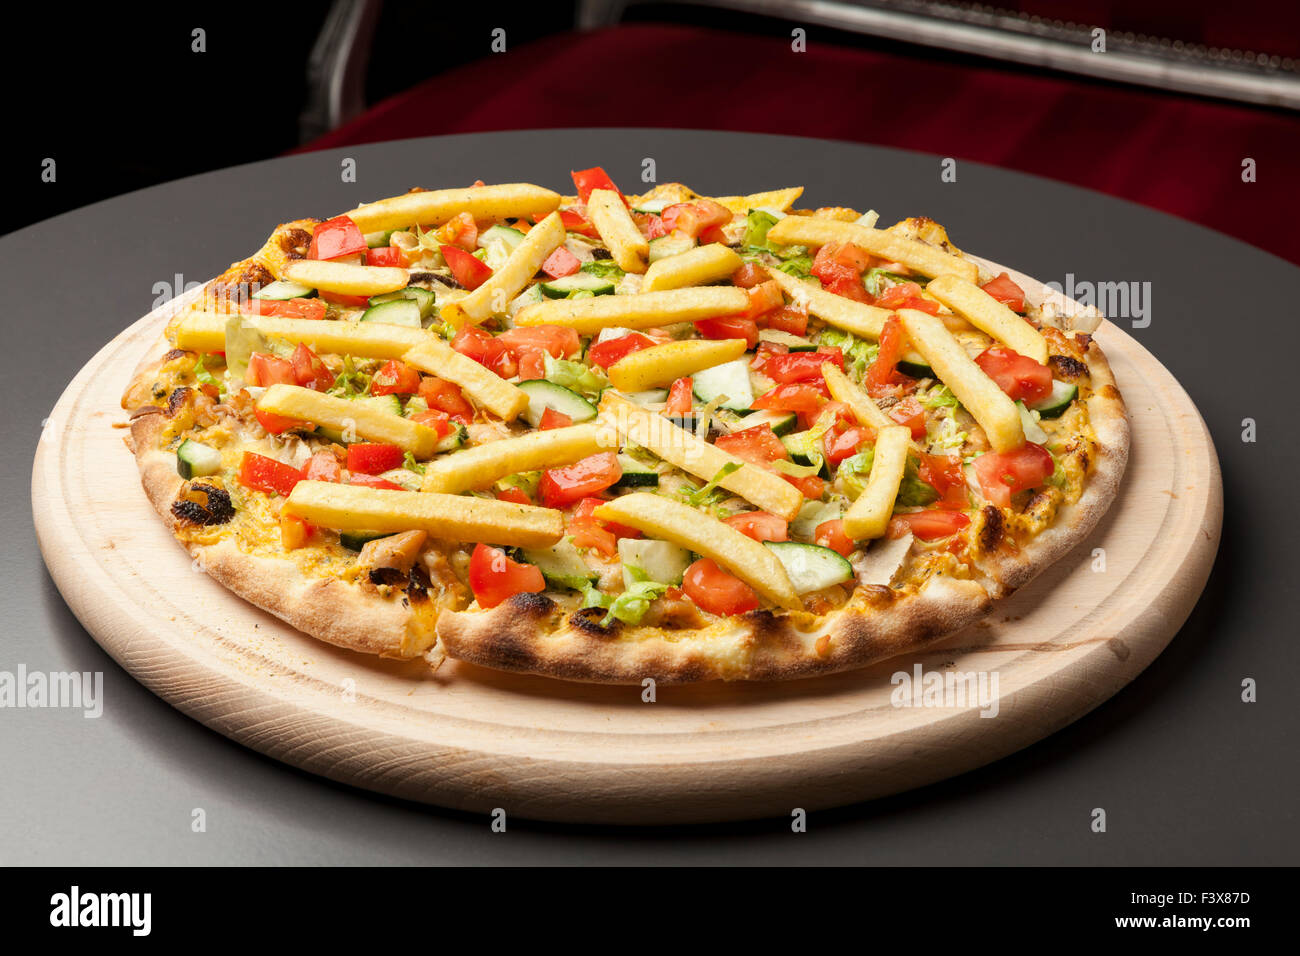 Pizza vegetariana con pepino, tomate y patatas fritas Foto de stock